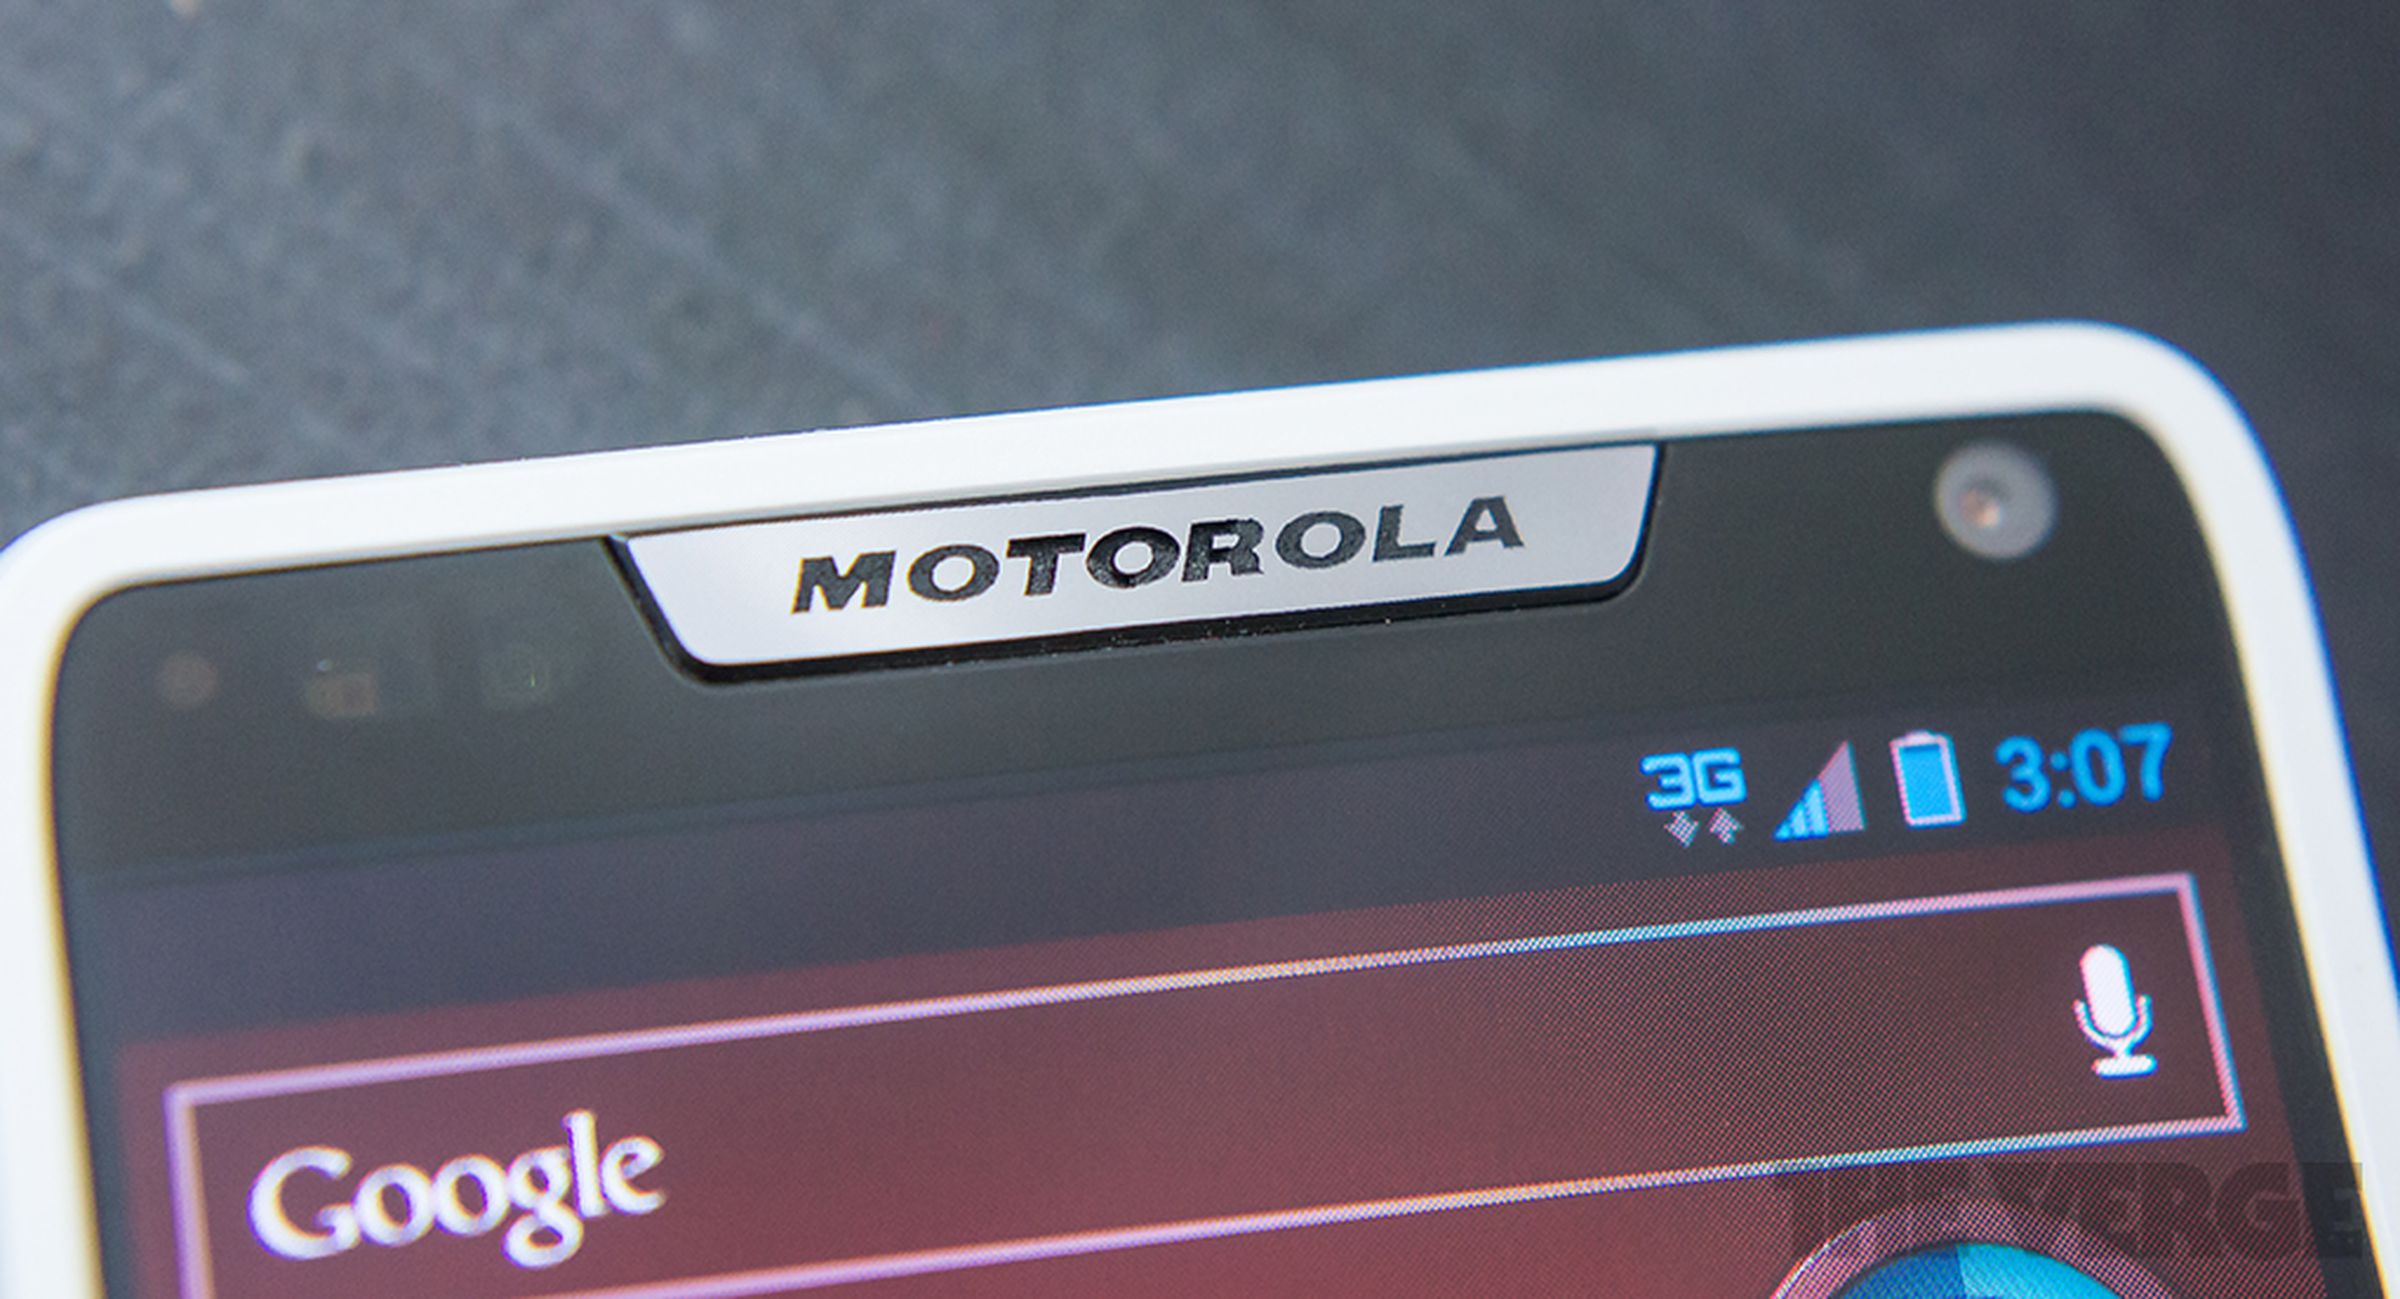 Motorola Droid RAZR M review photos